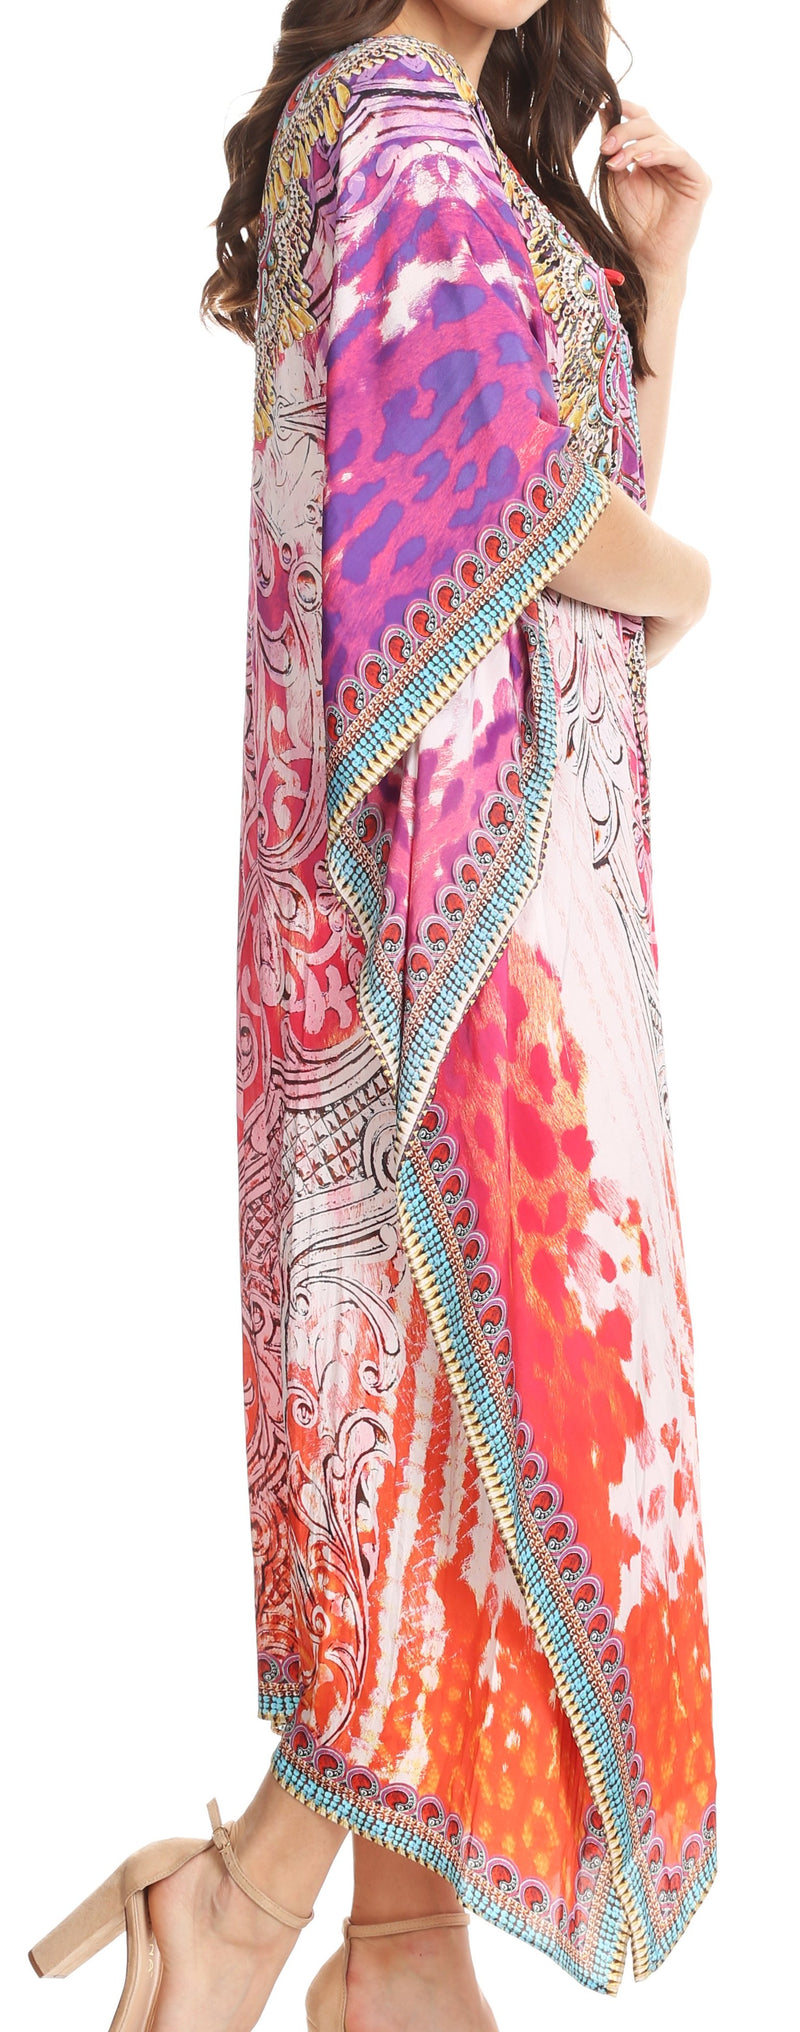 Sakkas Imani  V-neck Silky Lightweight Colorful Flowy Rhinestone Kaftan / Cover Up